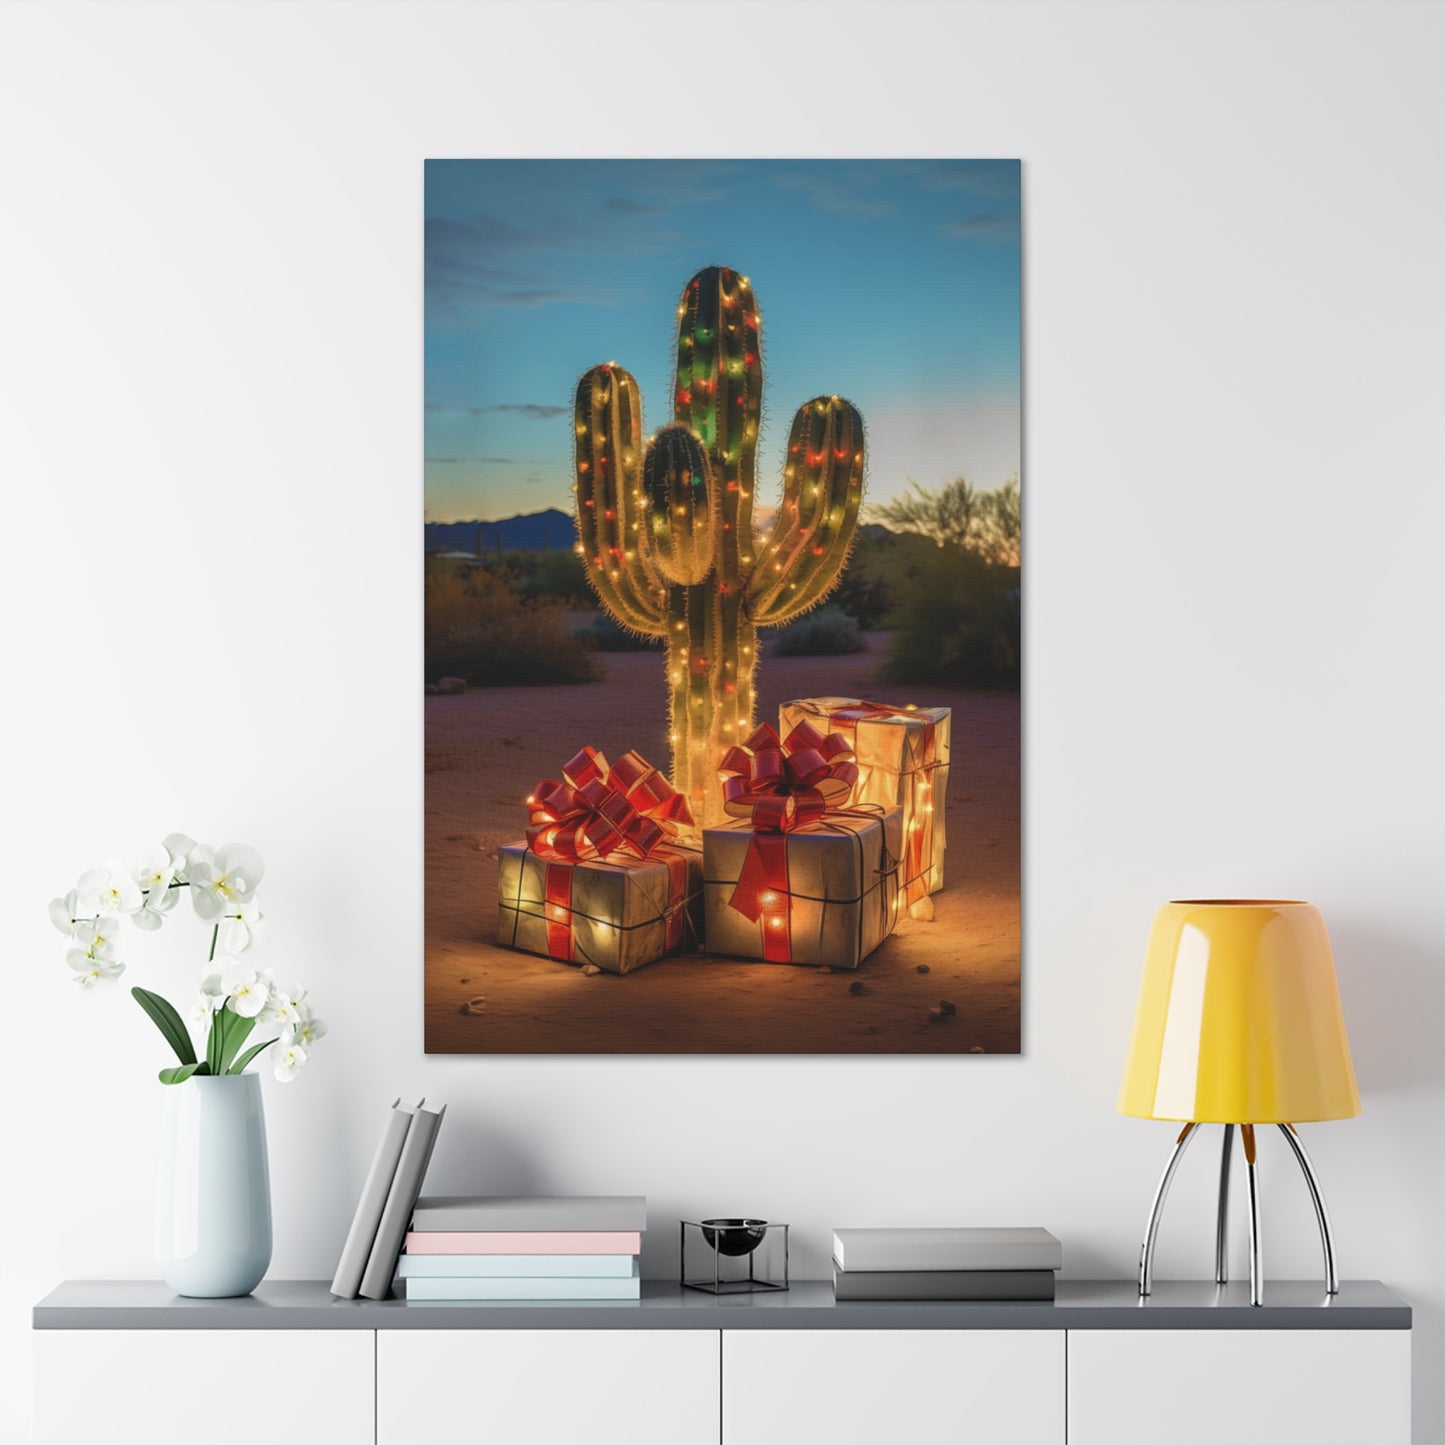 Cactus Christmas Tree canvas prints